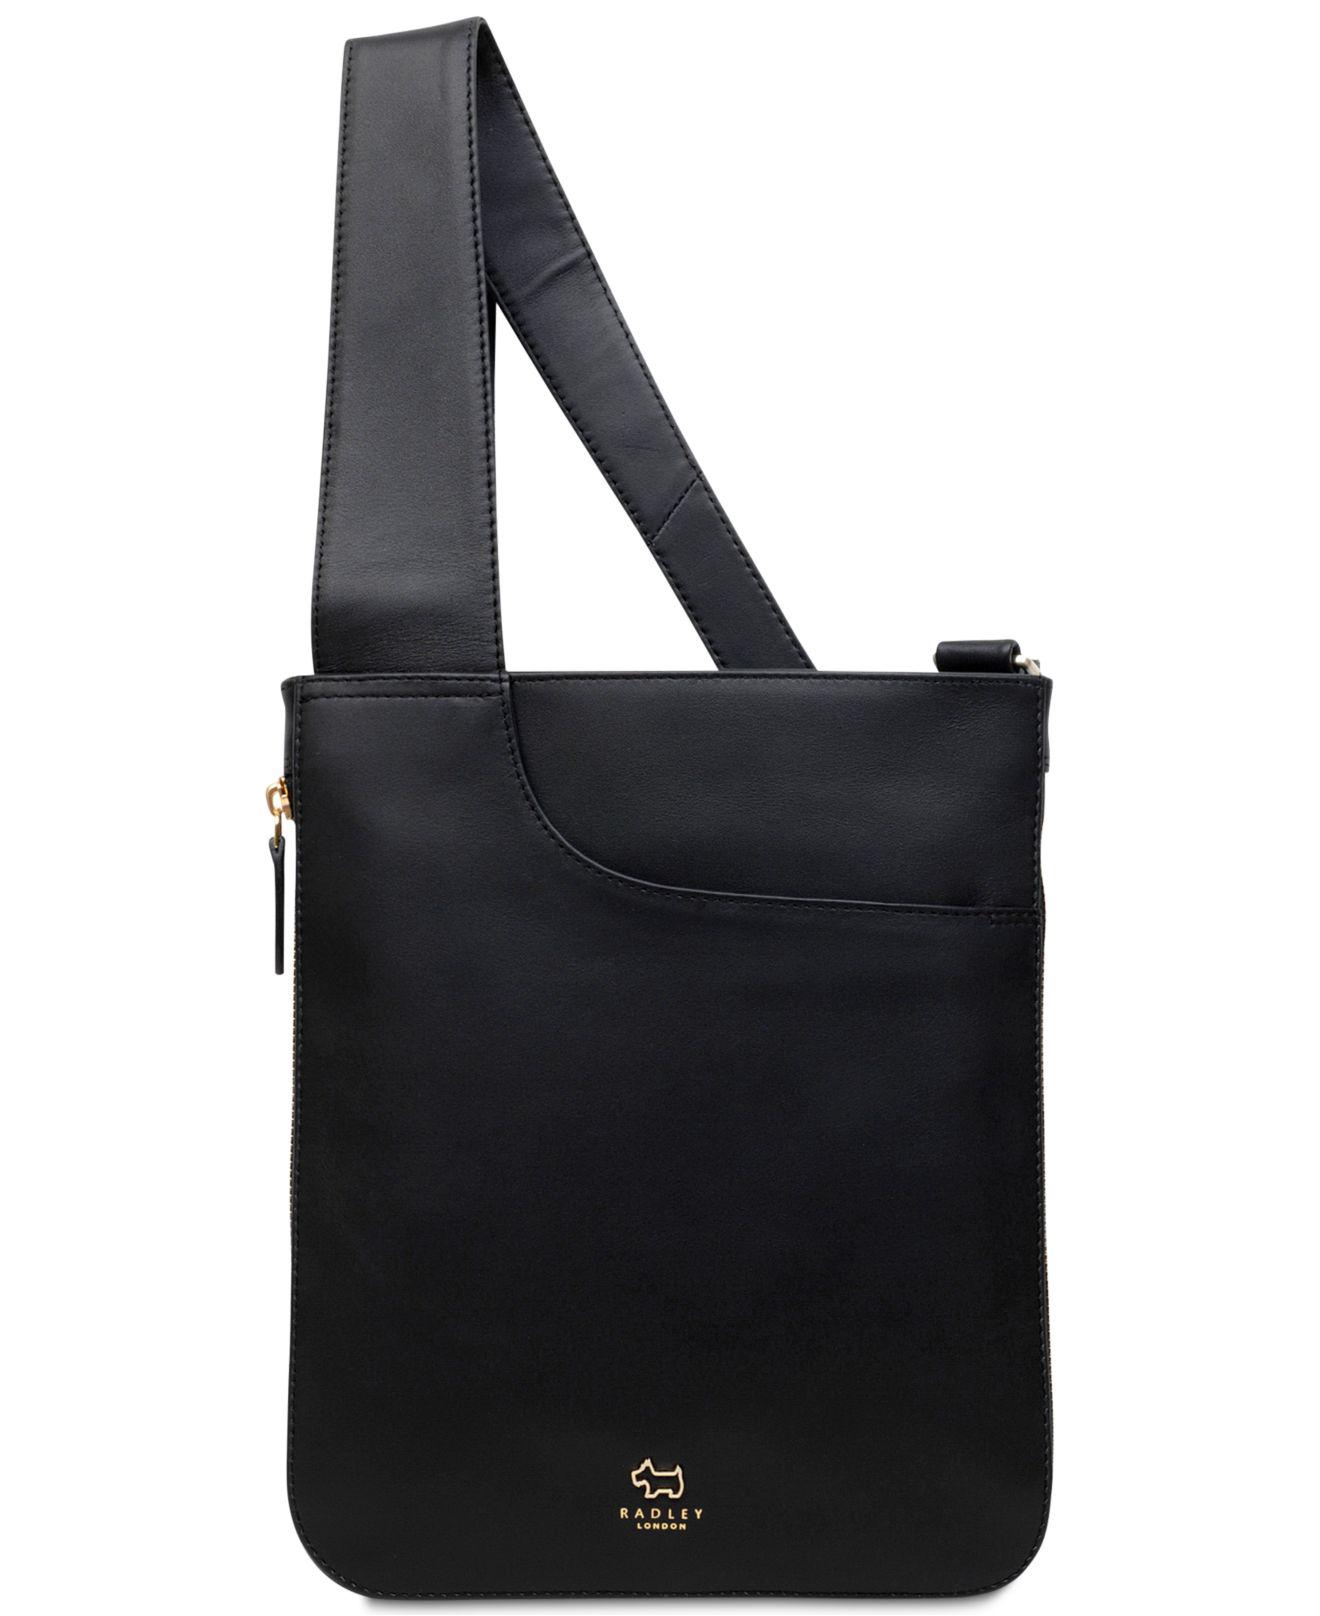 Radley Leather Pocket Bag Medium Zip-top Crossbody in Black - Lyst